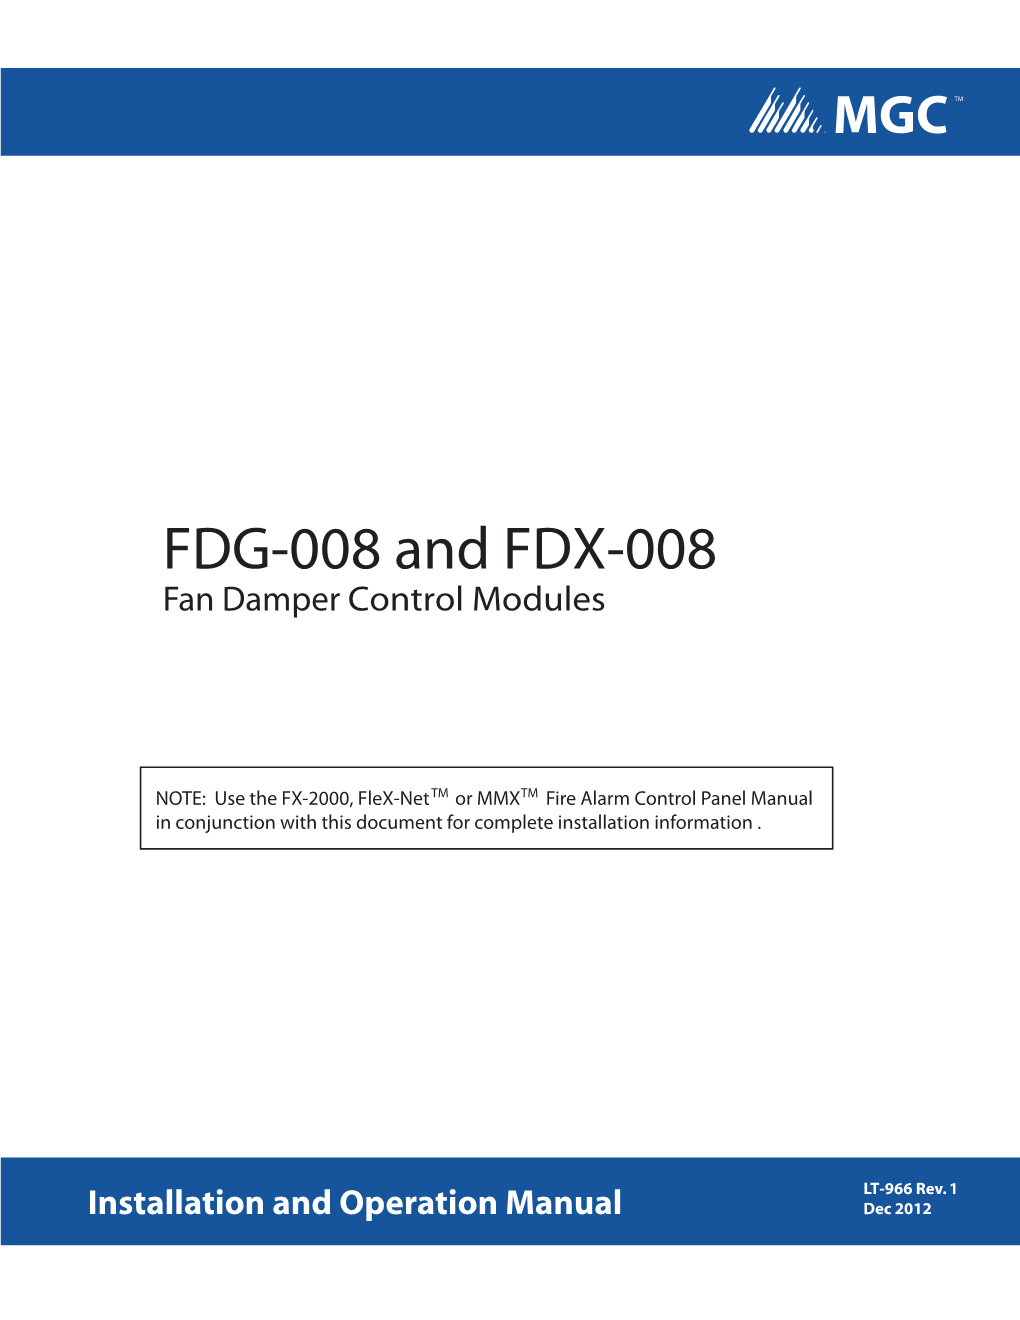 FDG-008 and FDX-008 Fan Damper Control Modules